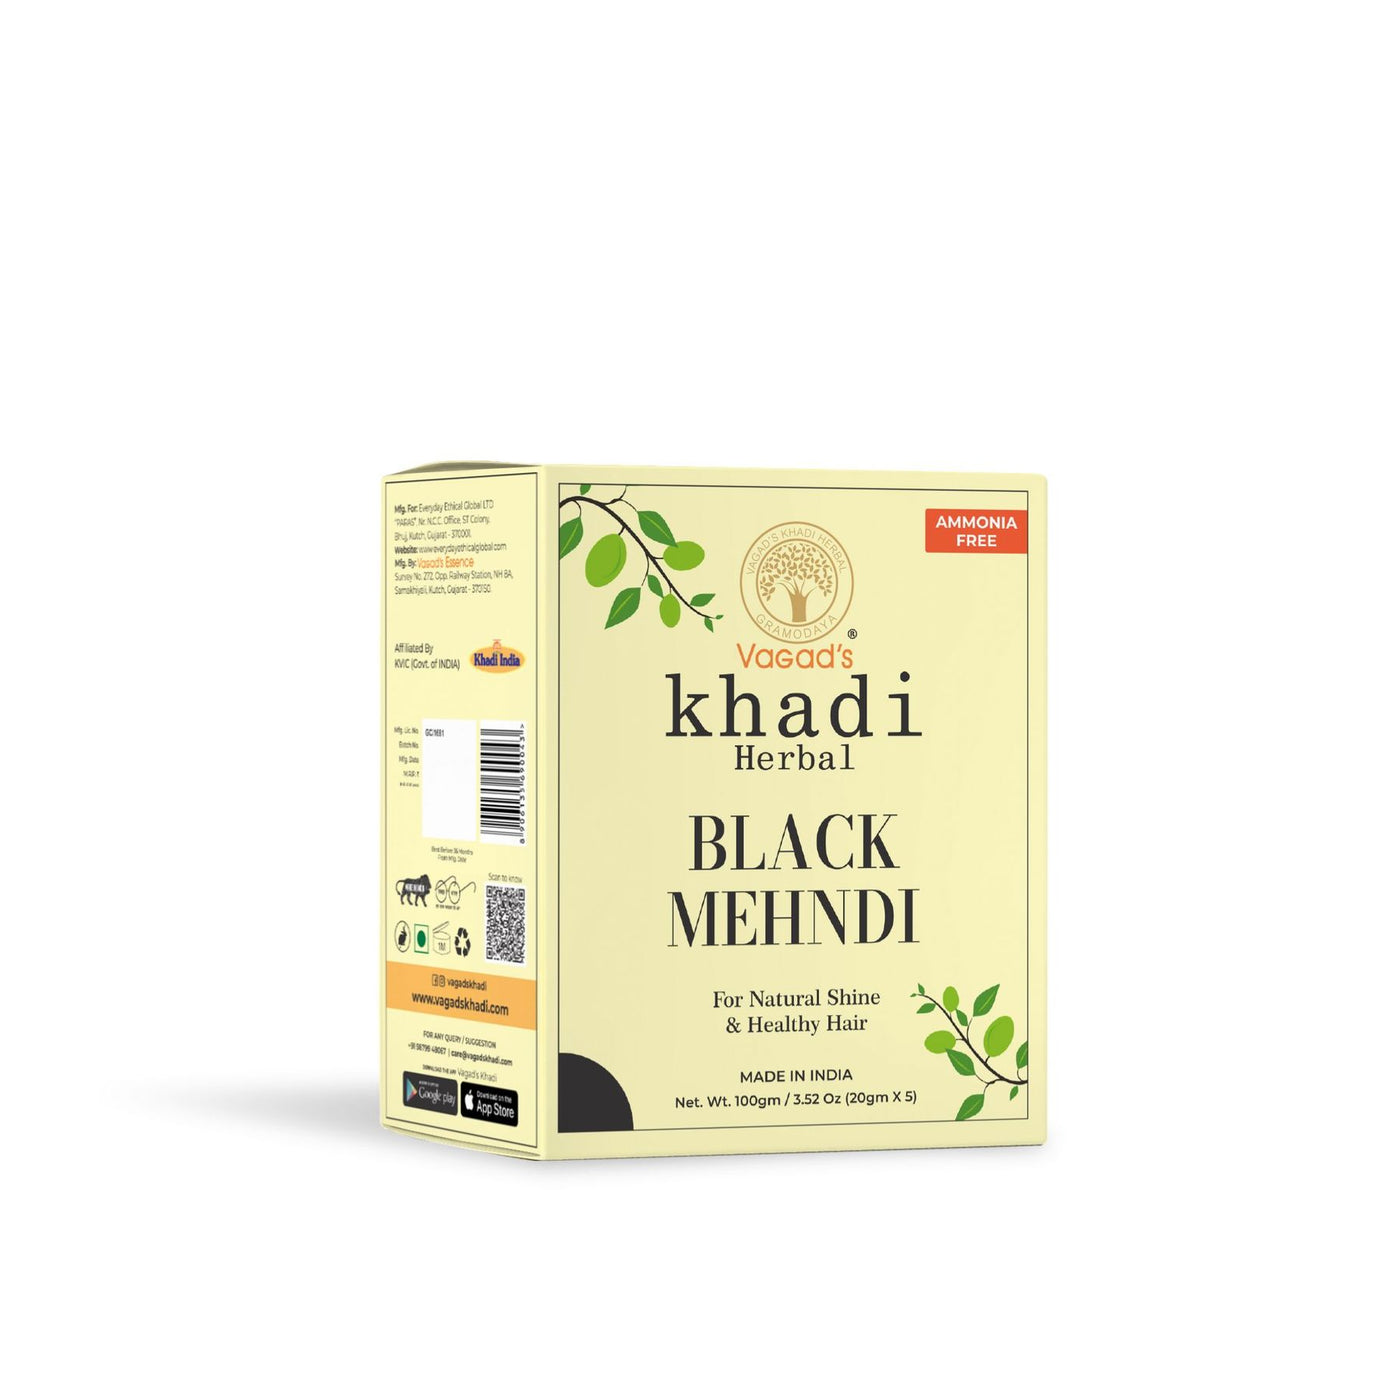 Vagad's Khadi Black Mehndi (Pack of 3)